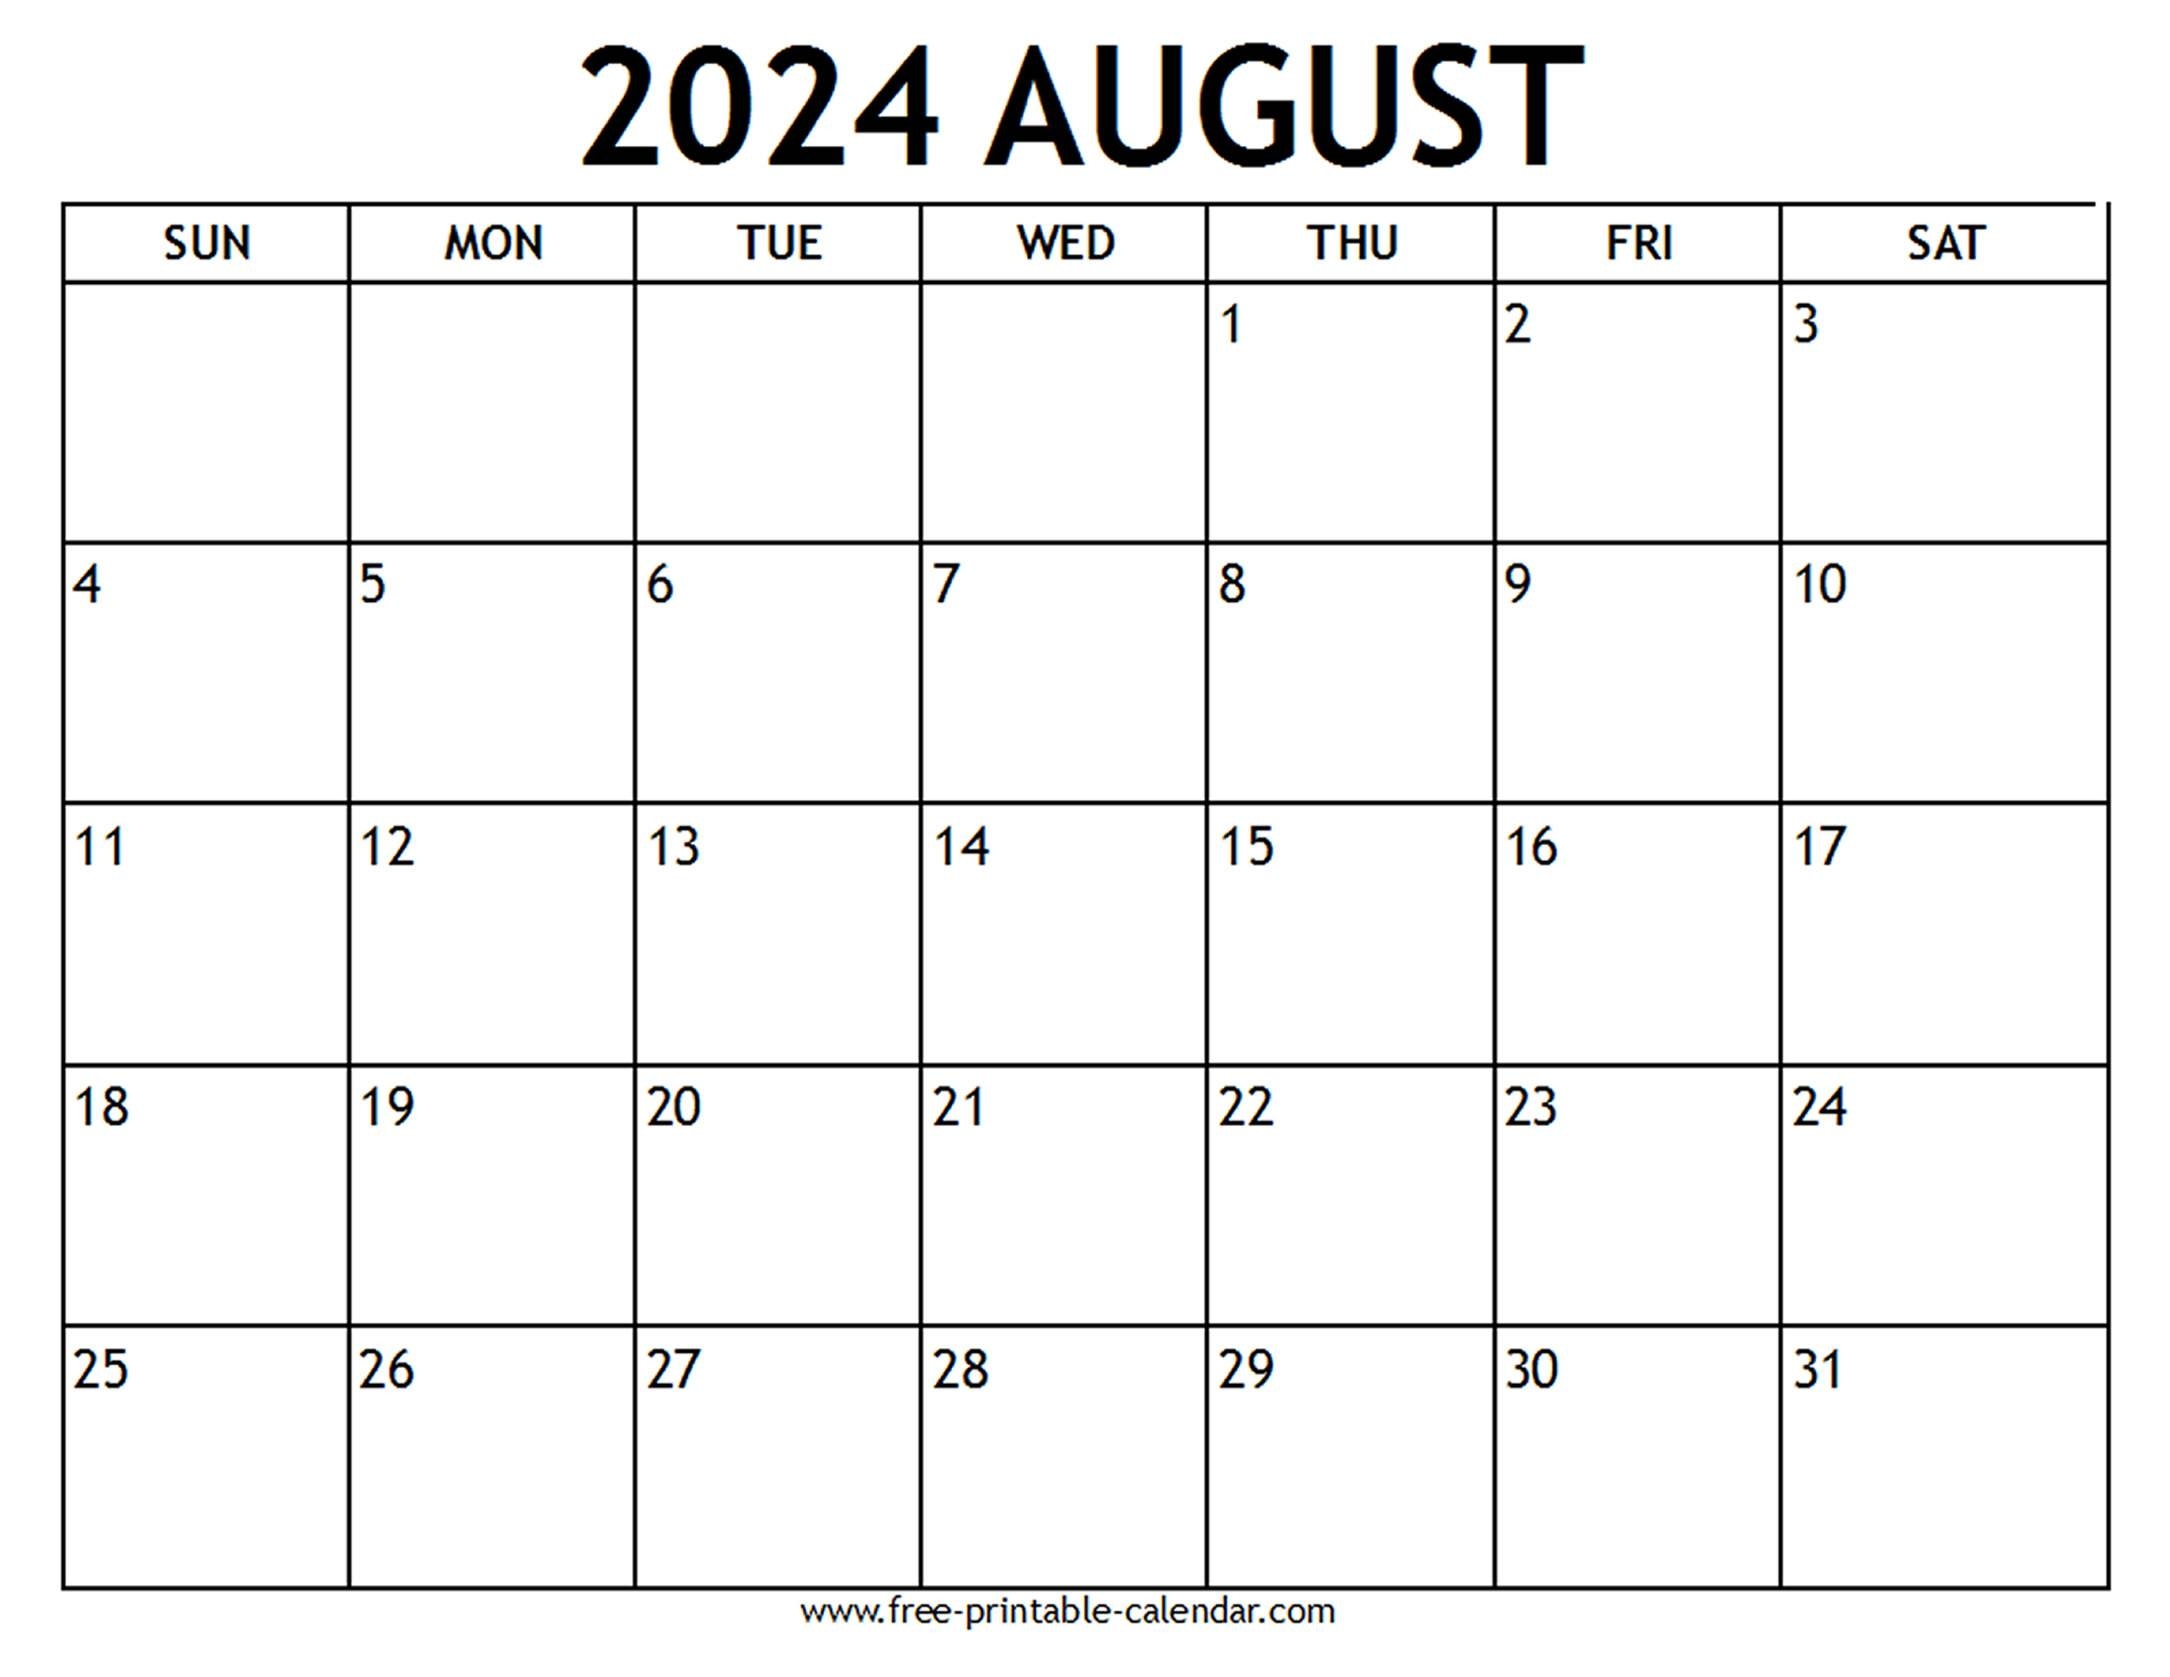 August 2024 Calendar Us Holidays - Free-Printable-Calendar regarding Free Printable Calendar 2024 August With Holidays